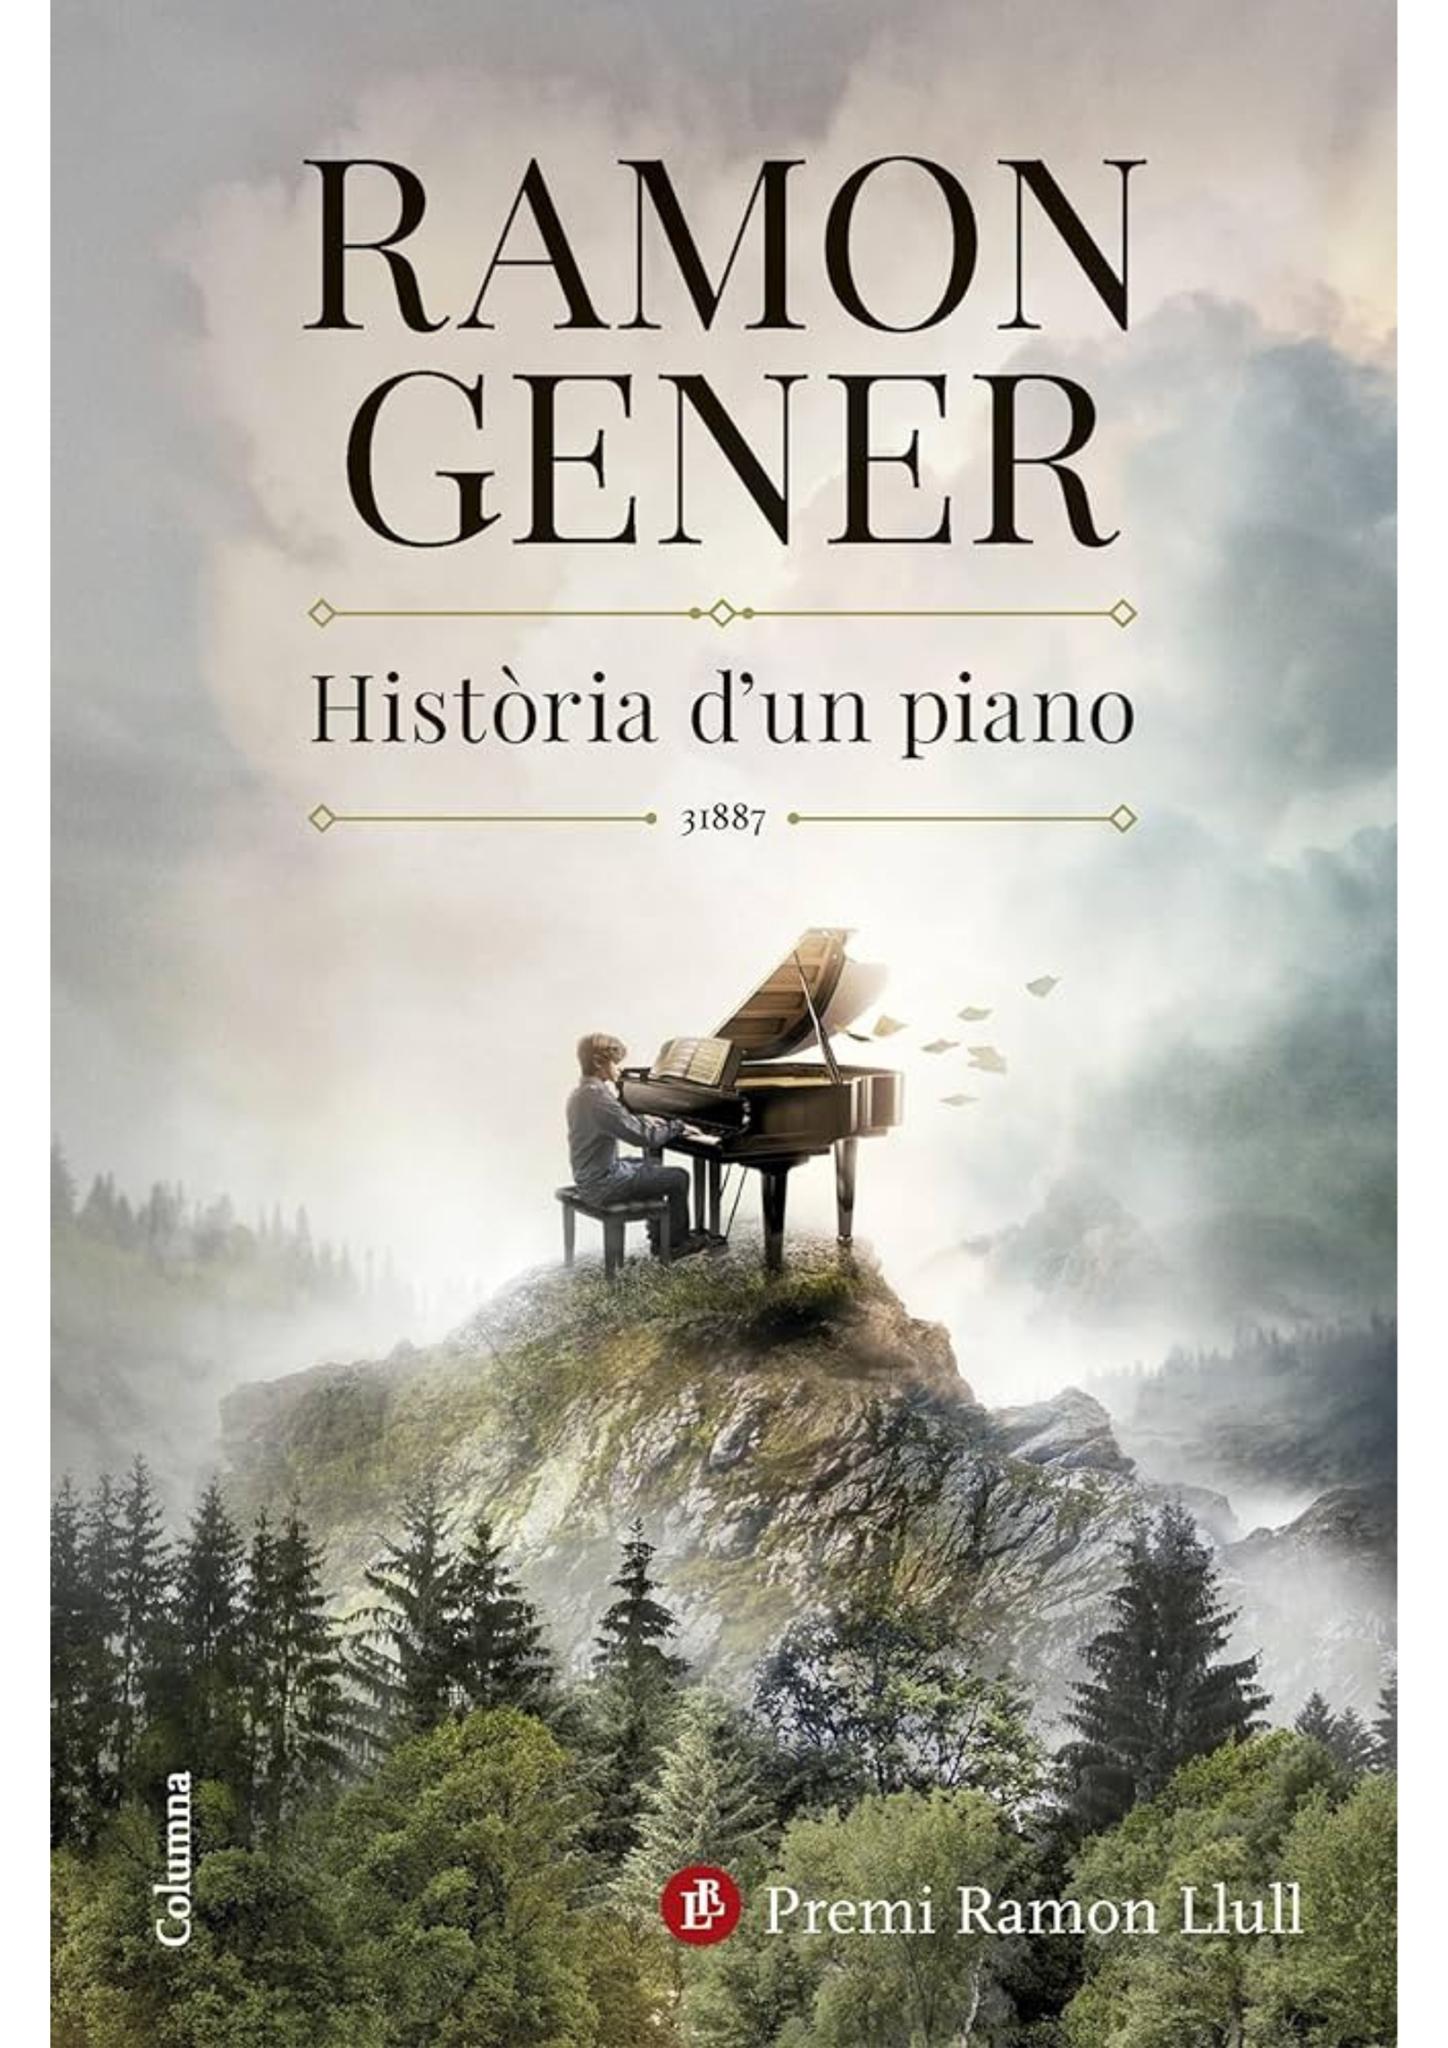  5. Història d’un piano de Ramón Gener